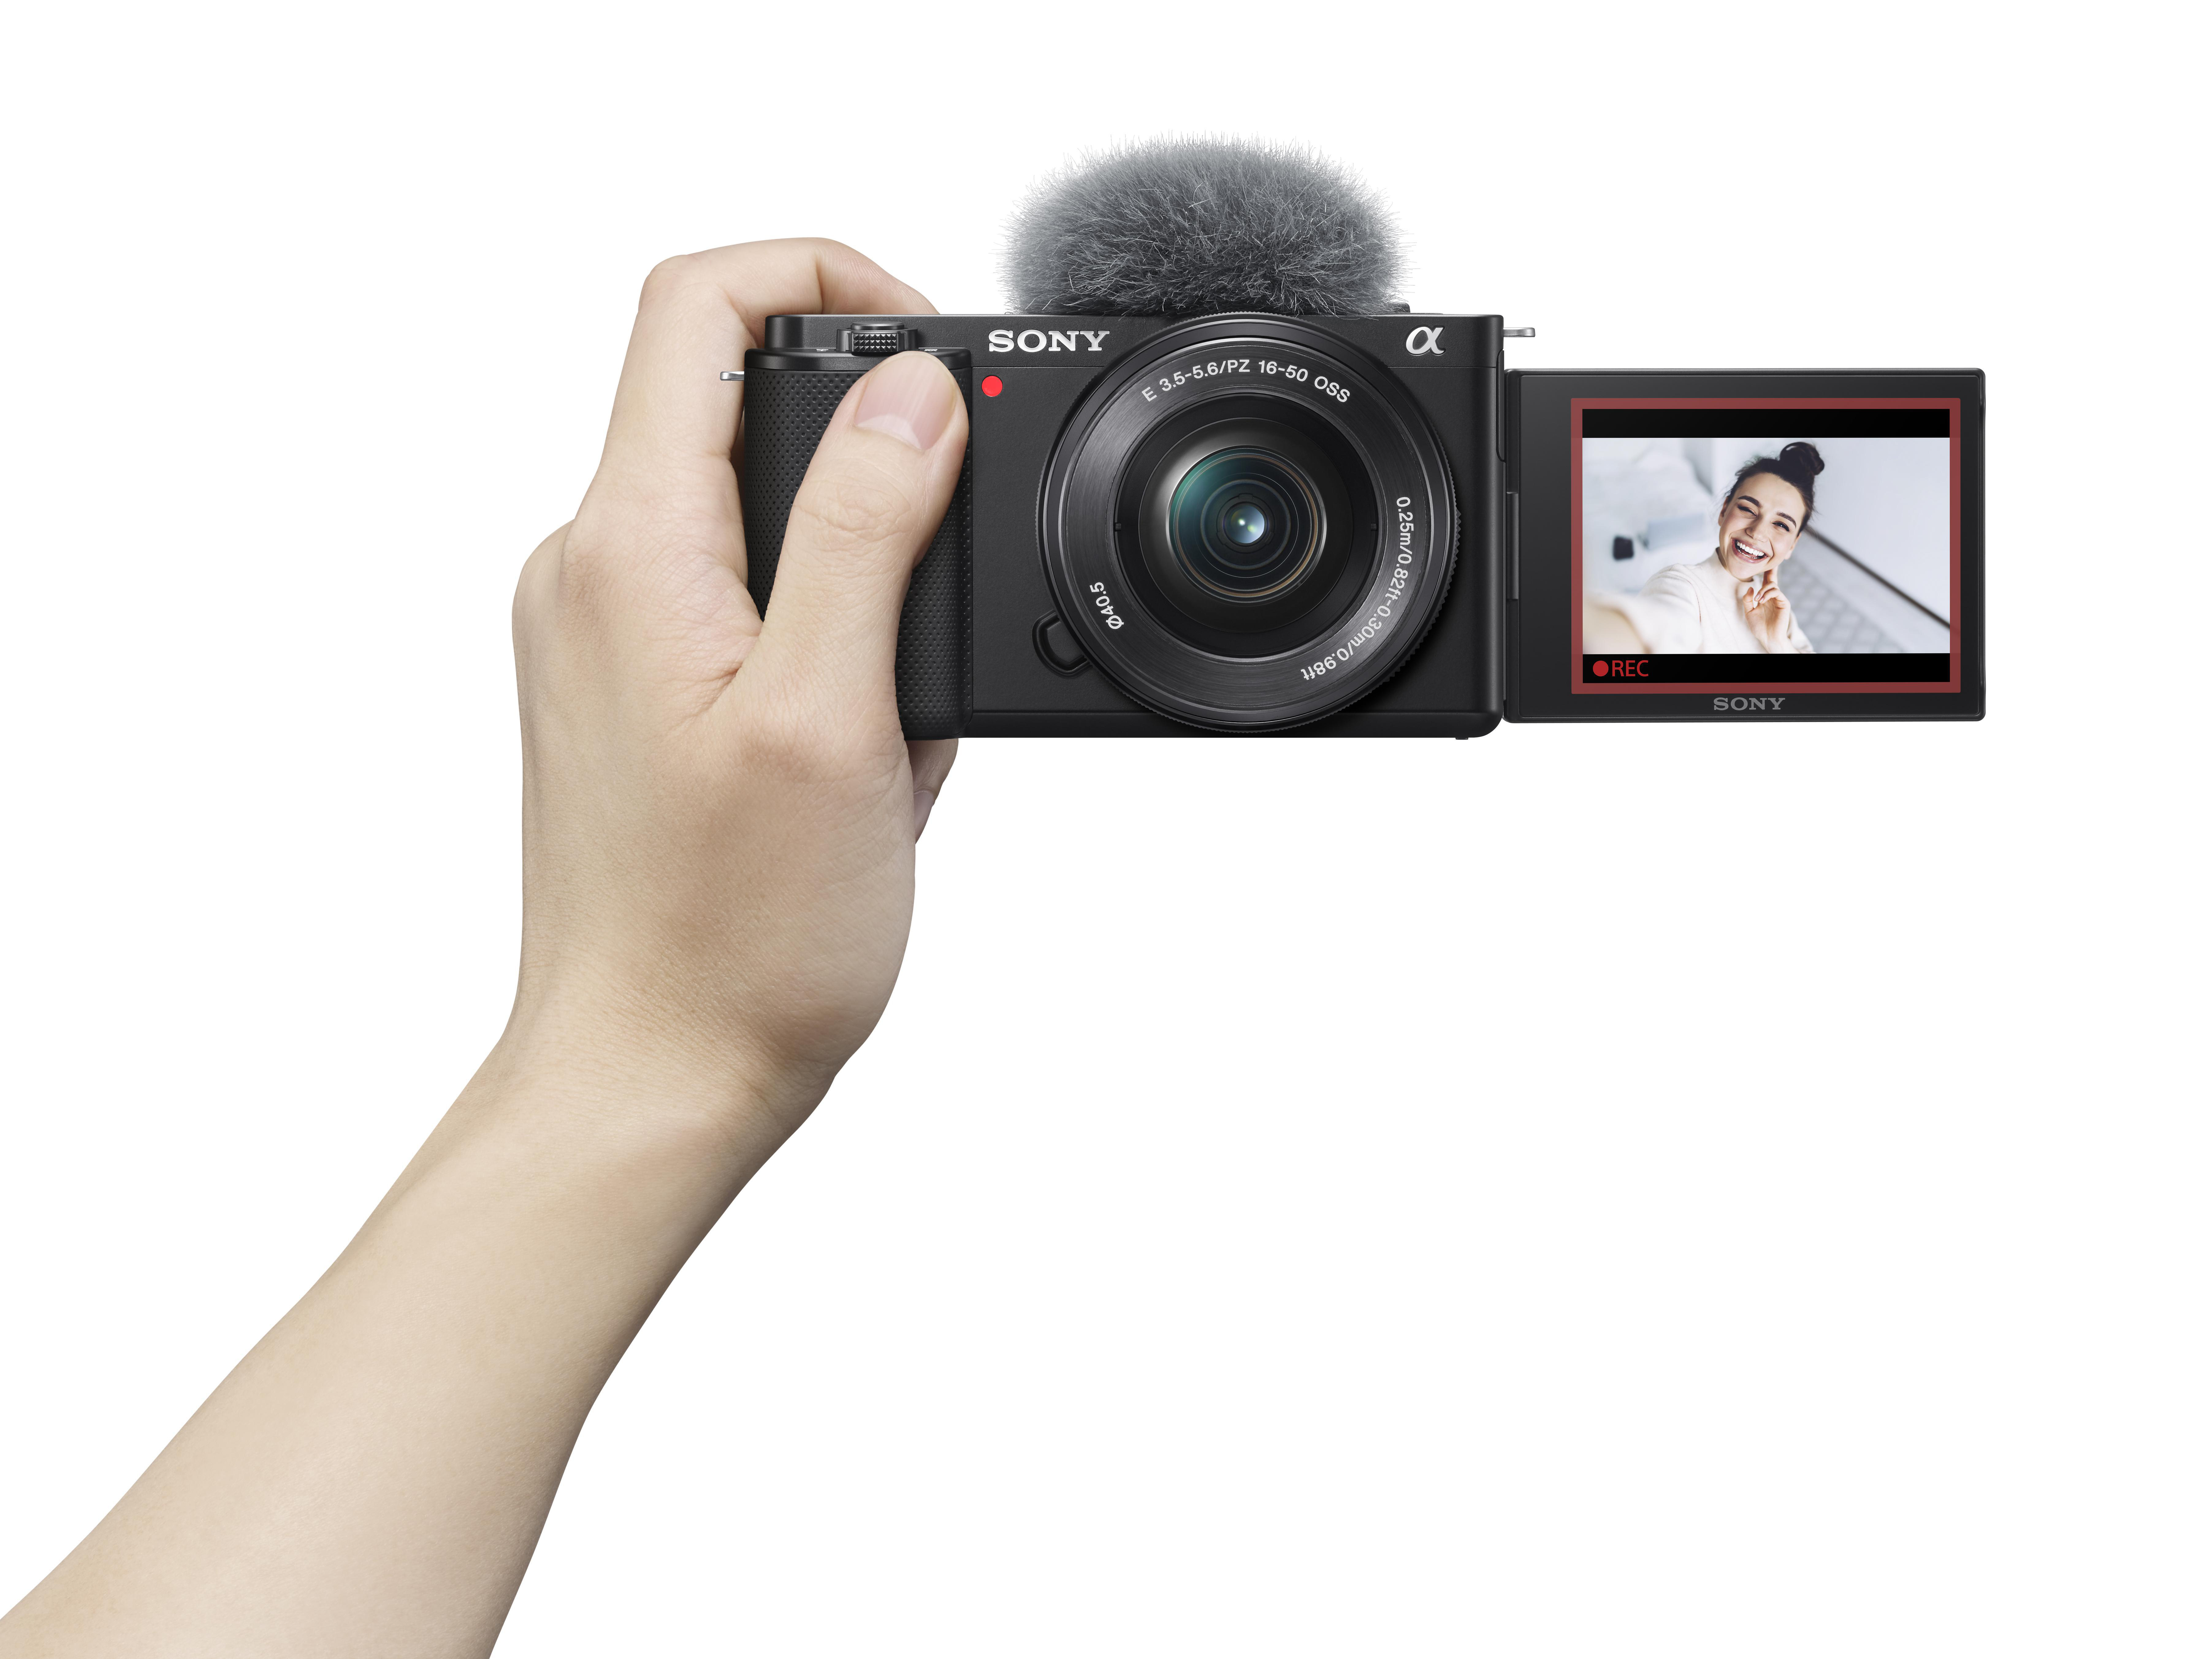 16-50 SONY Kit mit ZV-E10L 7,5 cm WLAN Systemkamera Tasche + Touchscreen, + Speicherkarte Alpha Objektiv mm, Display